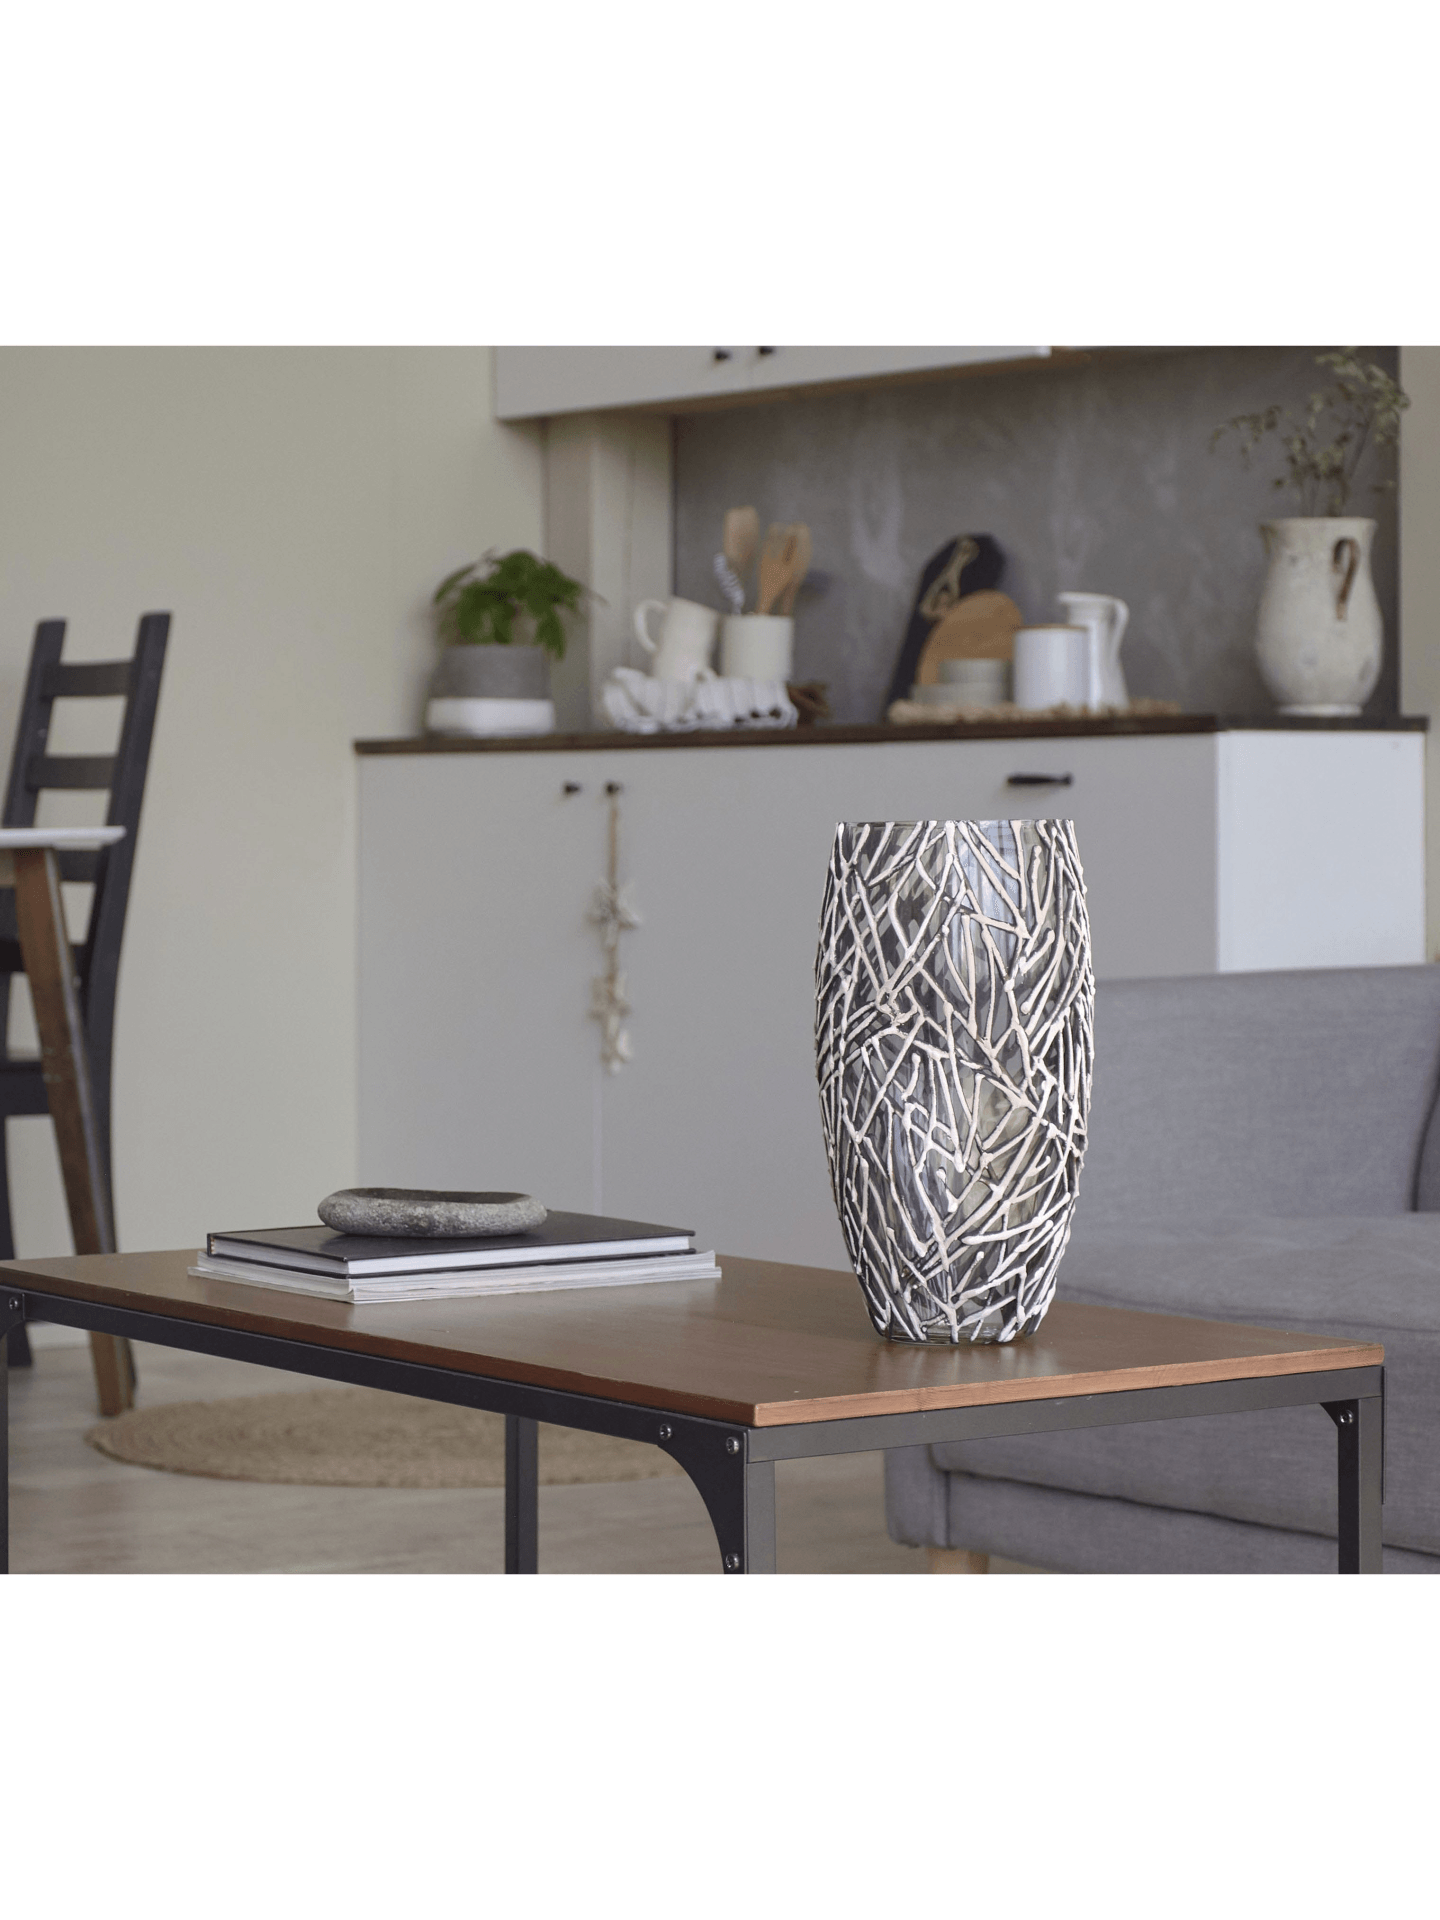 Handpainted Glass Vase for Flowers | Oval Vase | Interior Design Home Room Decor | Table vase 12 in | 7518/300/sh144  